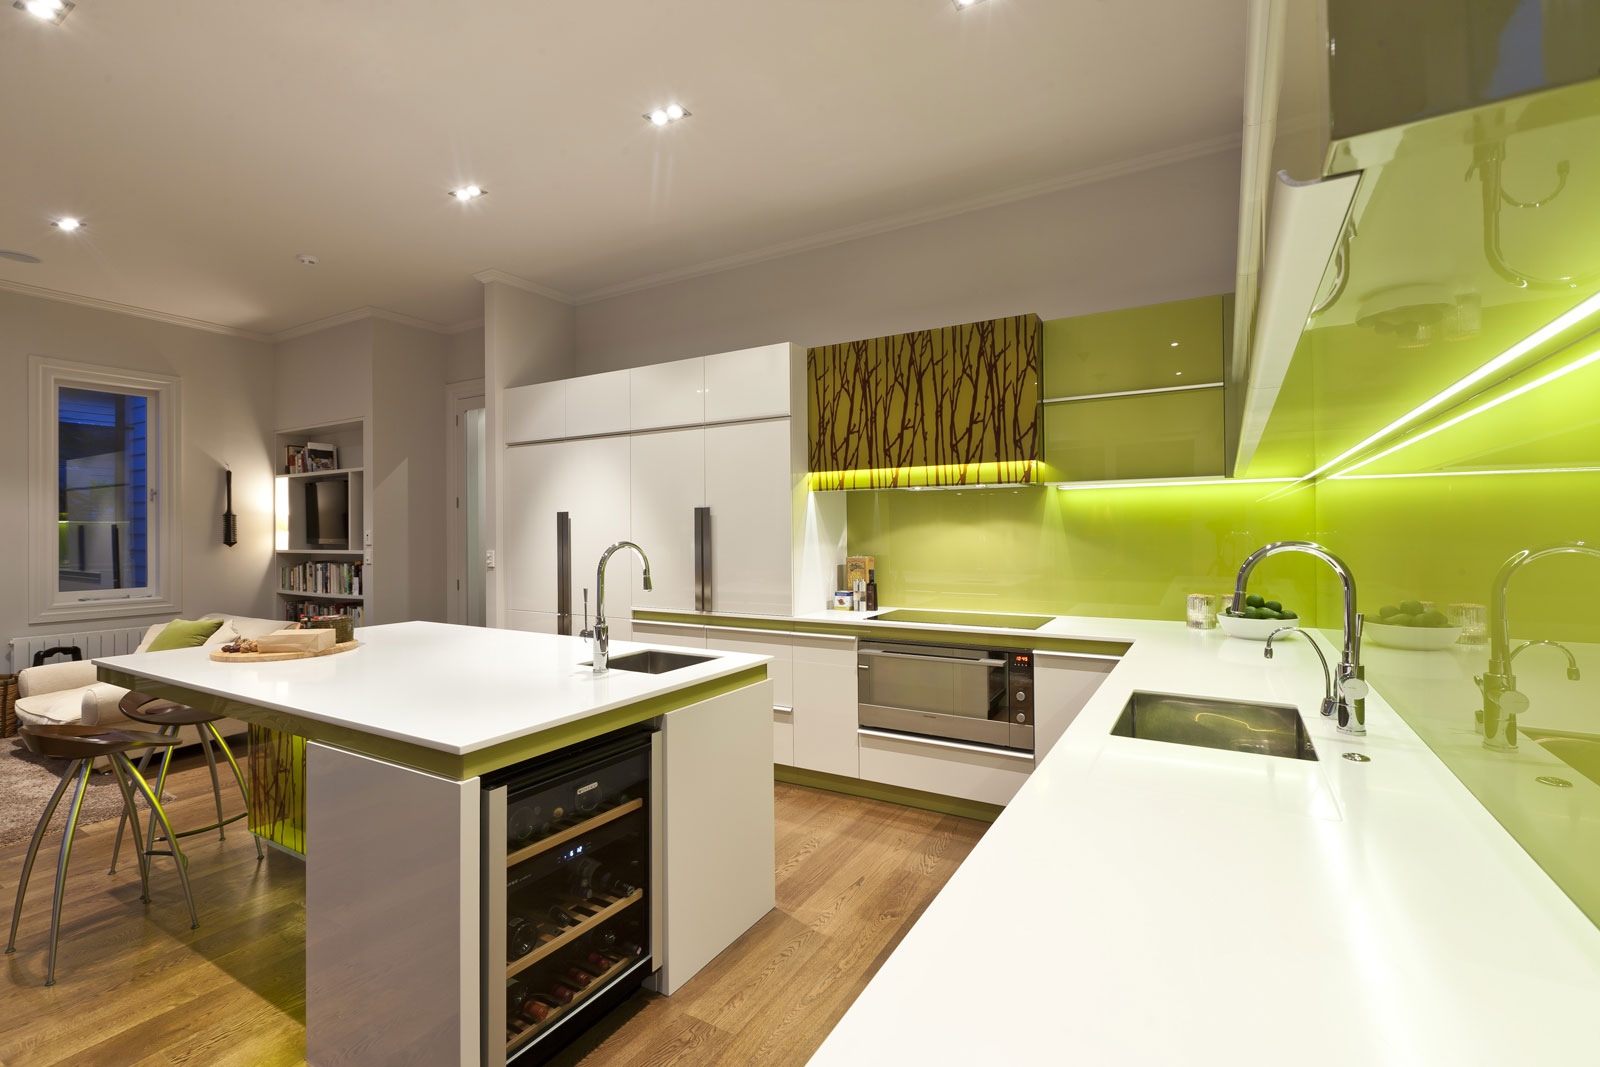 luxurious kitchen design "width =" 1600 "height =" 1067 "srcset =" https://mileray.com/wp-content/uploads/2020/05/1588512698_557_12-Small-Kitchen-Design-Ideas-With-Beautiful-Light-Decoration-by.jpg 1600w, https : //mileray.com/wp-content/uploads/2016/06/green-and-white-modern-kitchen-2-300x200.jpg 300w, https://mileray.com/wp-content/uploads/2016 / 06 / green-and-white-modern-kitchen-2-768x512.jpg 768w, https://mileray.com/wp-content/uploads/2016/06/green-and-white-modern-kitchen-2- 1024x683 .jpg 1024w, https://mileray.com/wp-content/uploads/2016/06/green-and-white-modern-kitchen-2-696x464.jpg 696w, https://mileray.com/wp- content / uploads / 2016/06 / green-white-modern-kitchen-2-1068x712.jpg 1068w, https://mileray.com/wp-content/uploads/2016/06/green-and-white-modern -kitchen- 2-630x420.jpg 630w "sizes =" (maximum width: 1600px) 100vw, 1600px